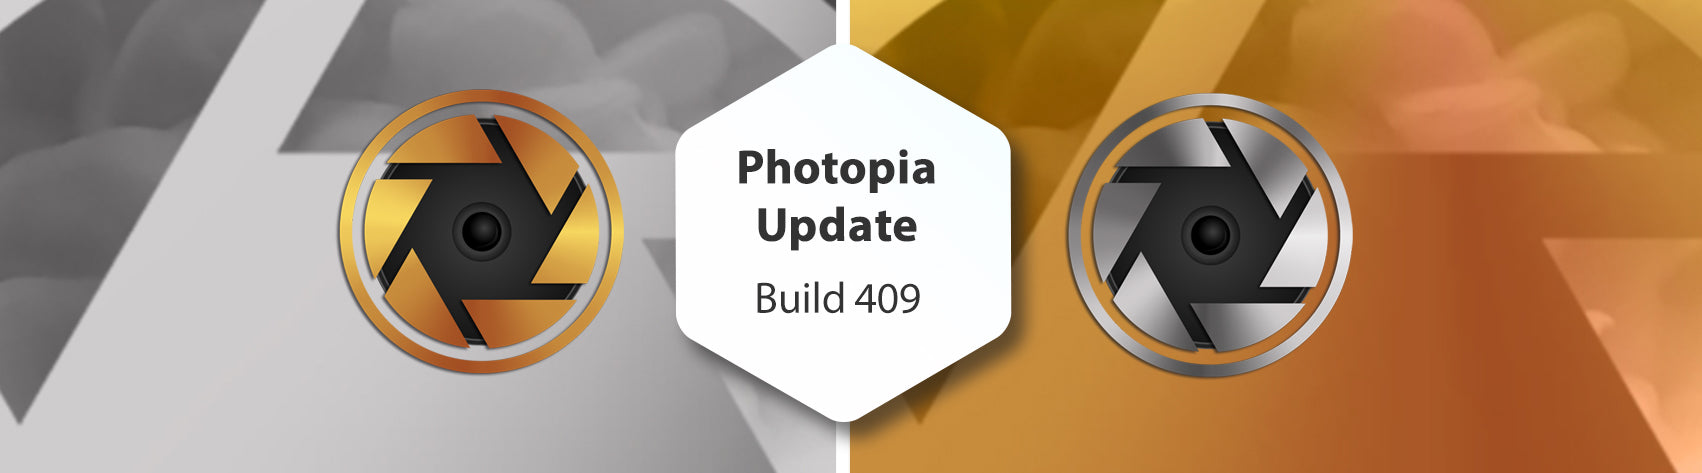 Photopia Update - Build 409